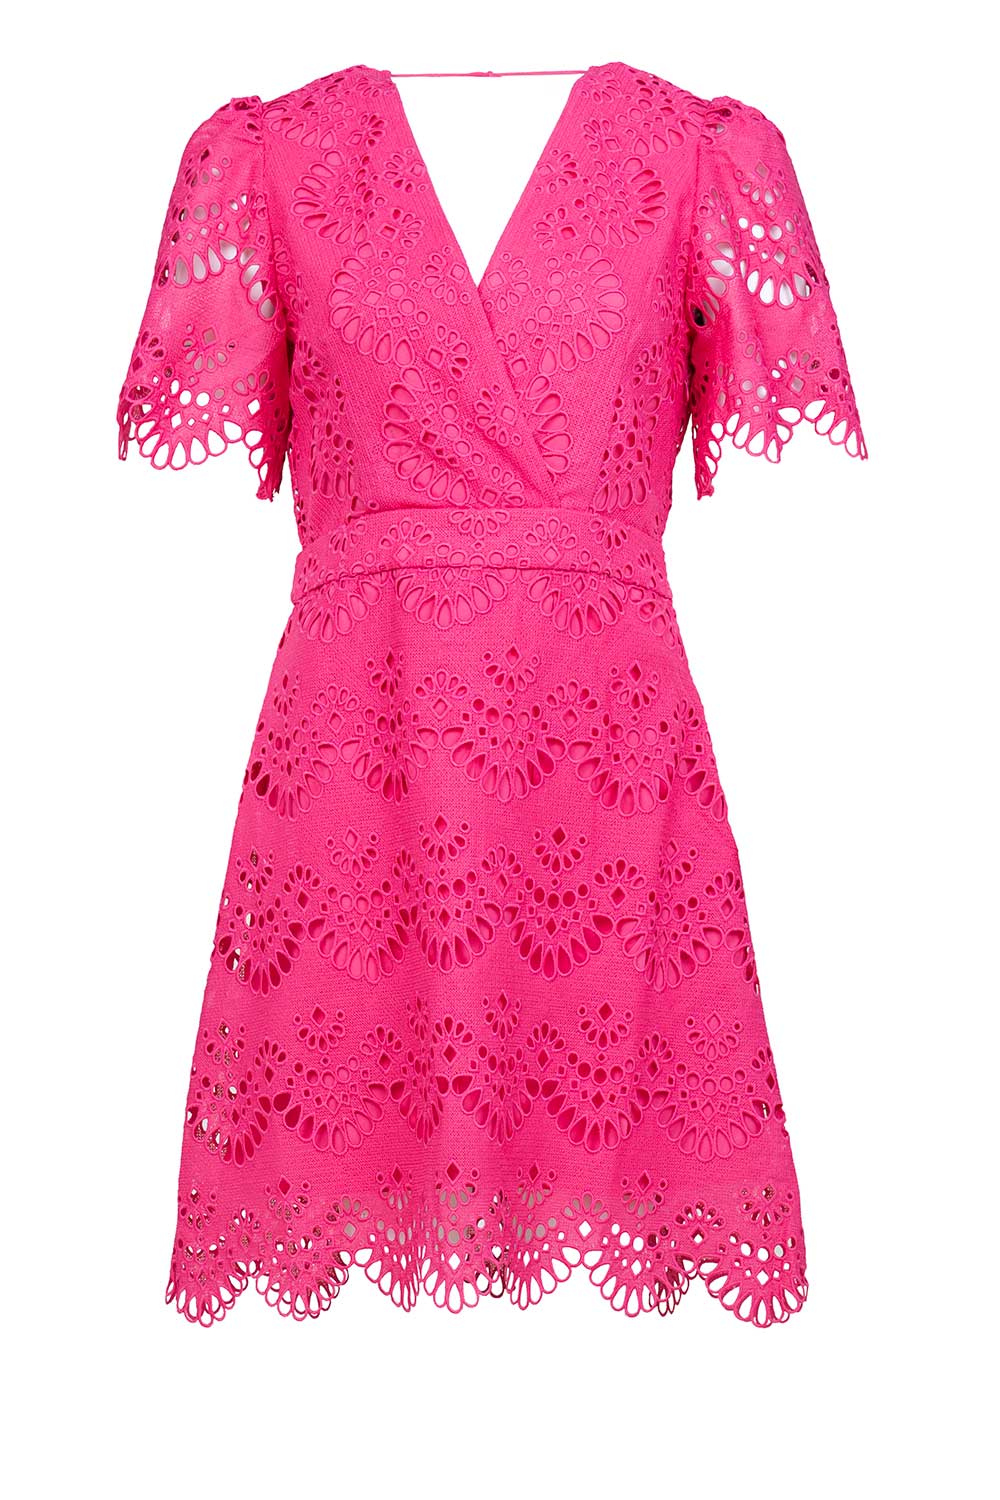 Suncoo Broderie jurk Chirel roze